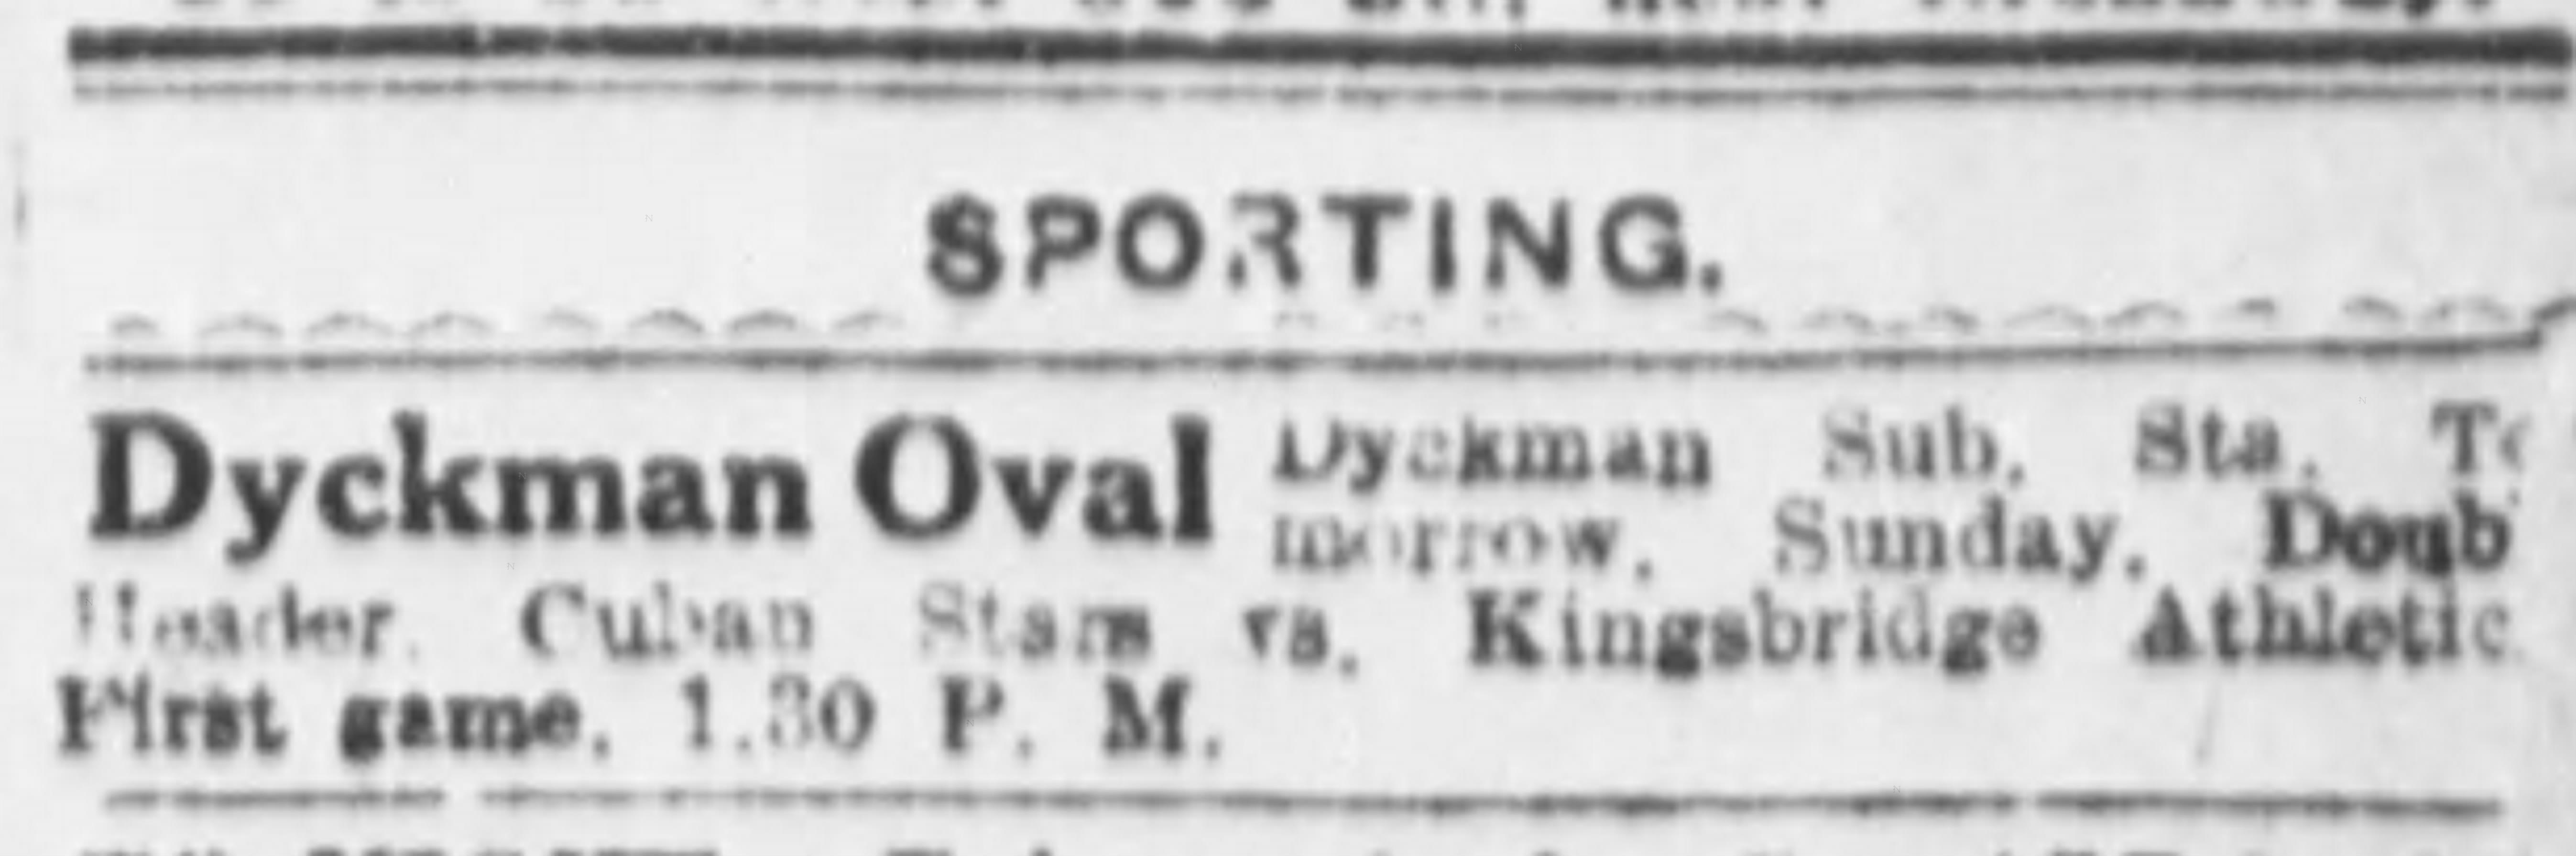 1917 Cuban Stars Kingsbridge Athletics Dyckman Oval